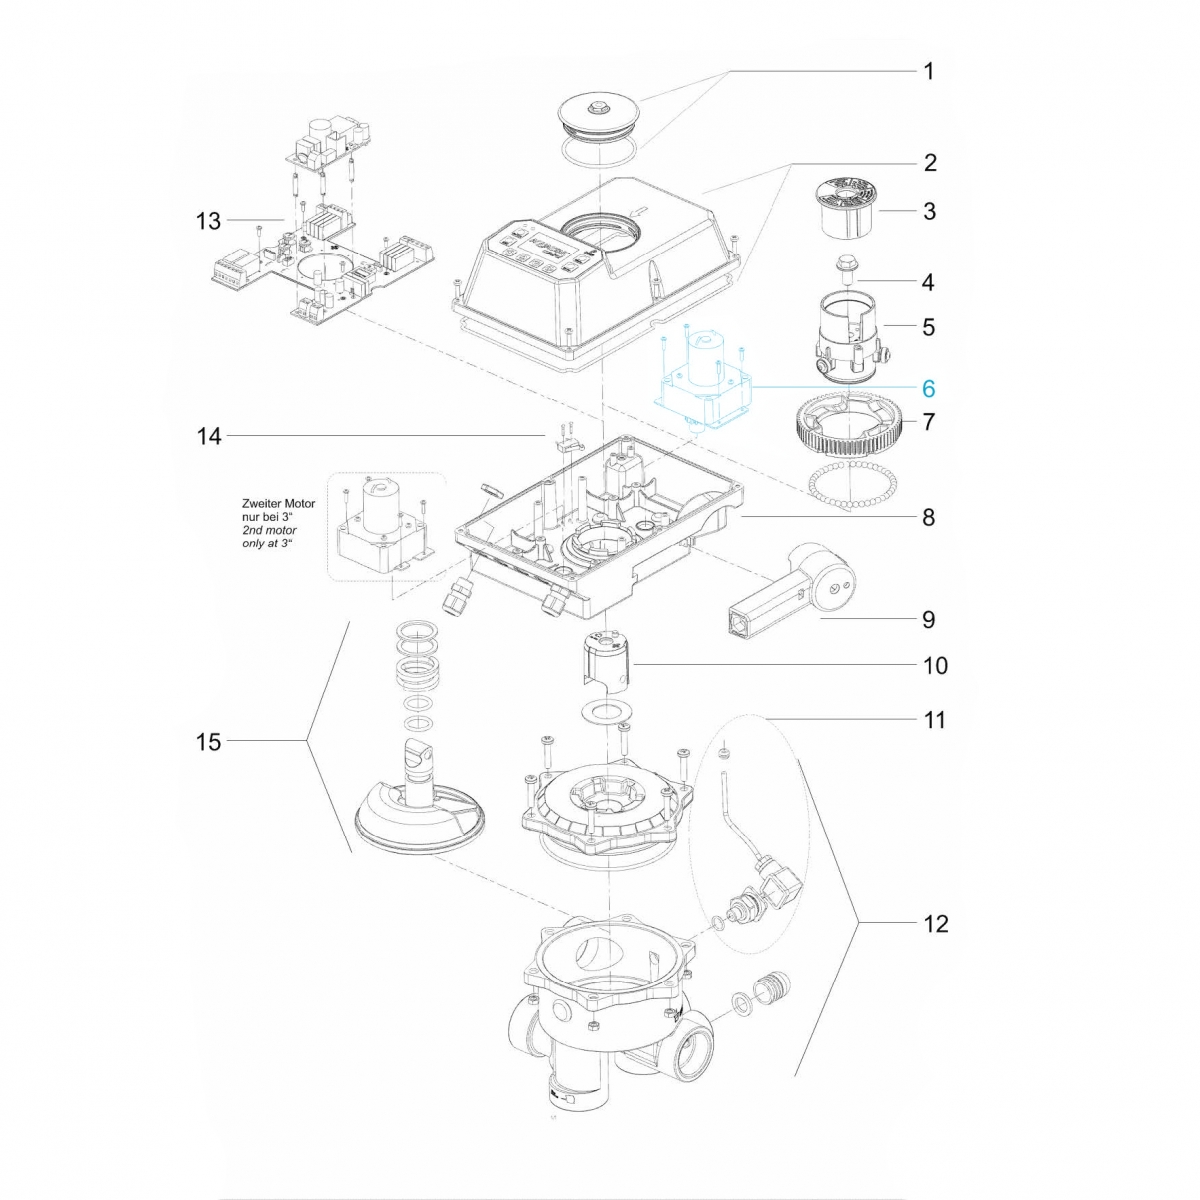 Spare part kit for Aquastar Control - motor 6V DC Spare part kit for Aquastar Control - motor 6V DC